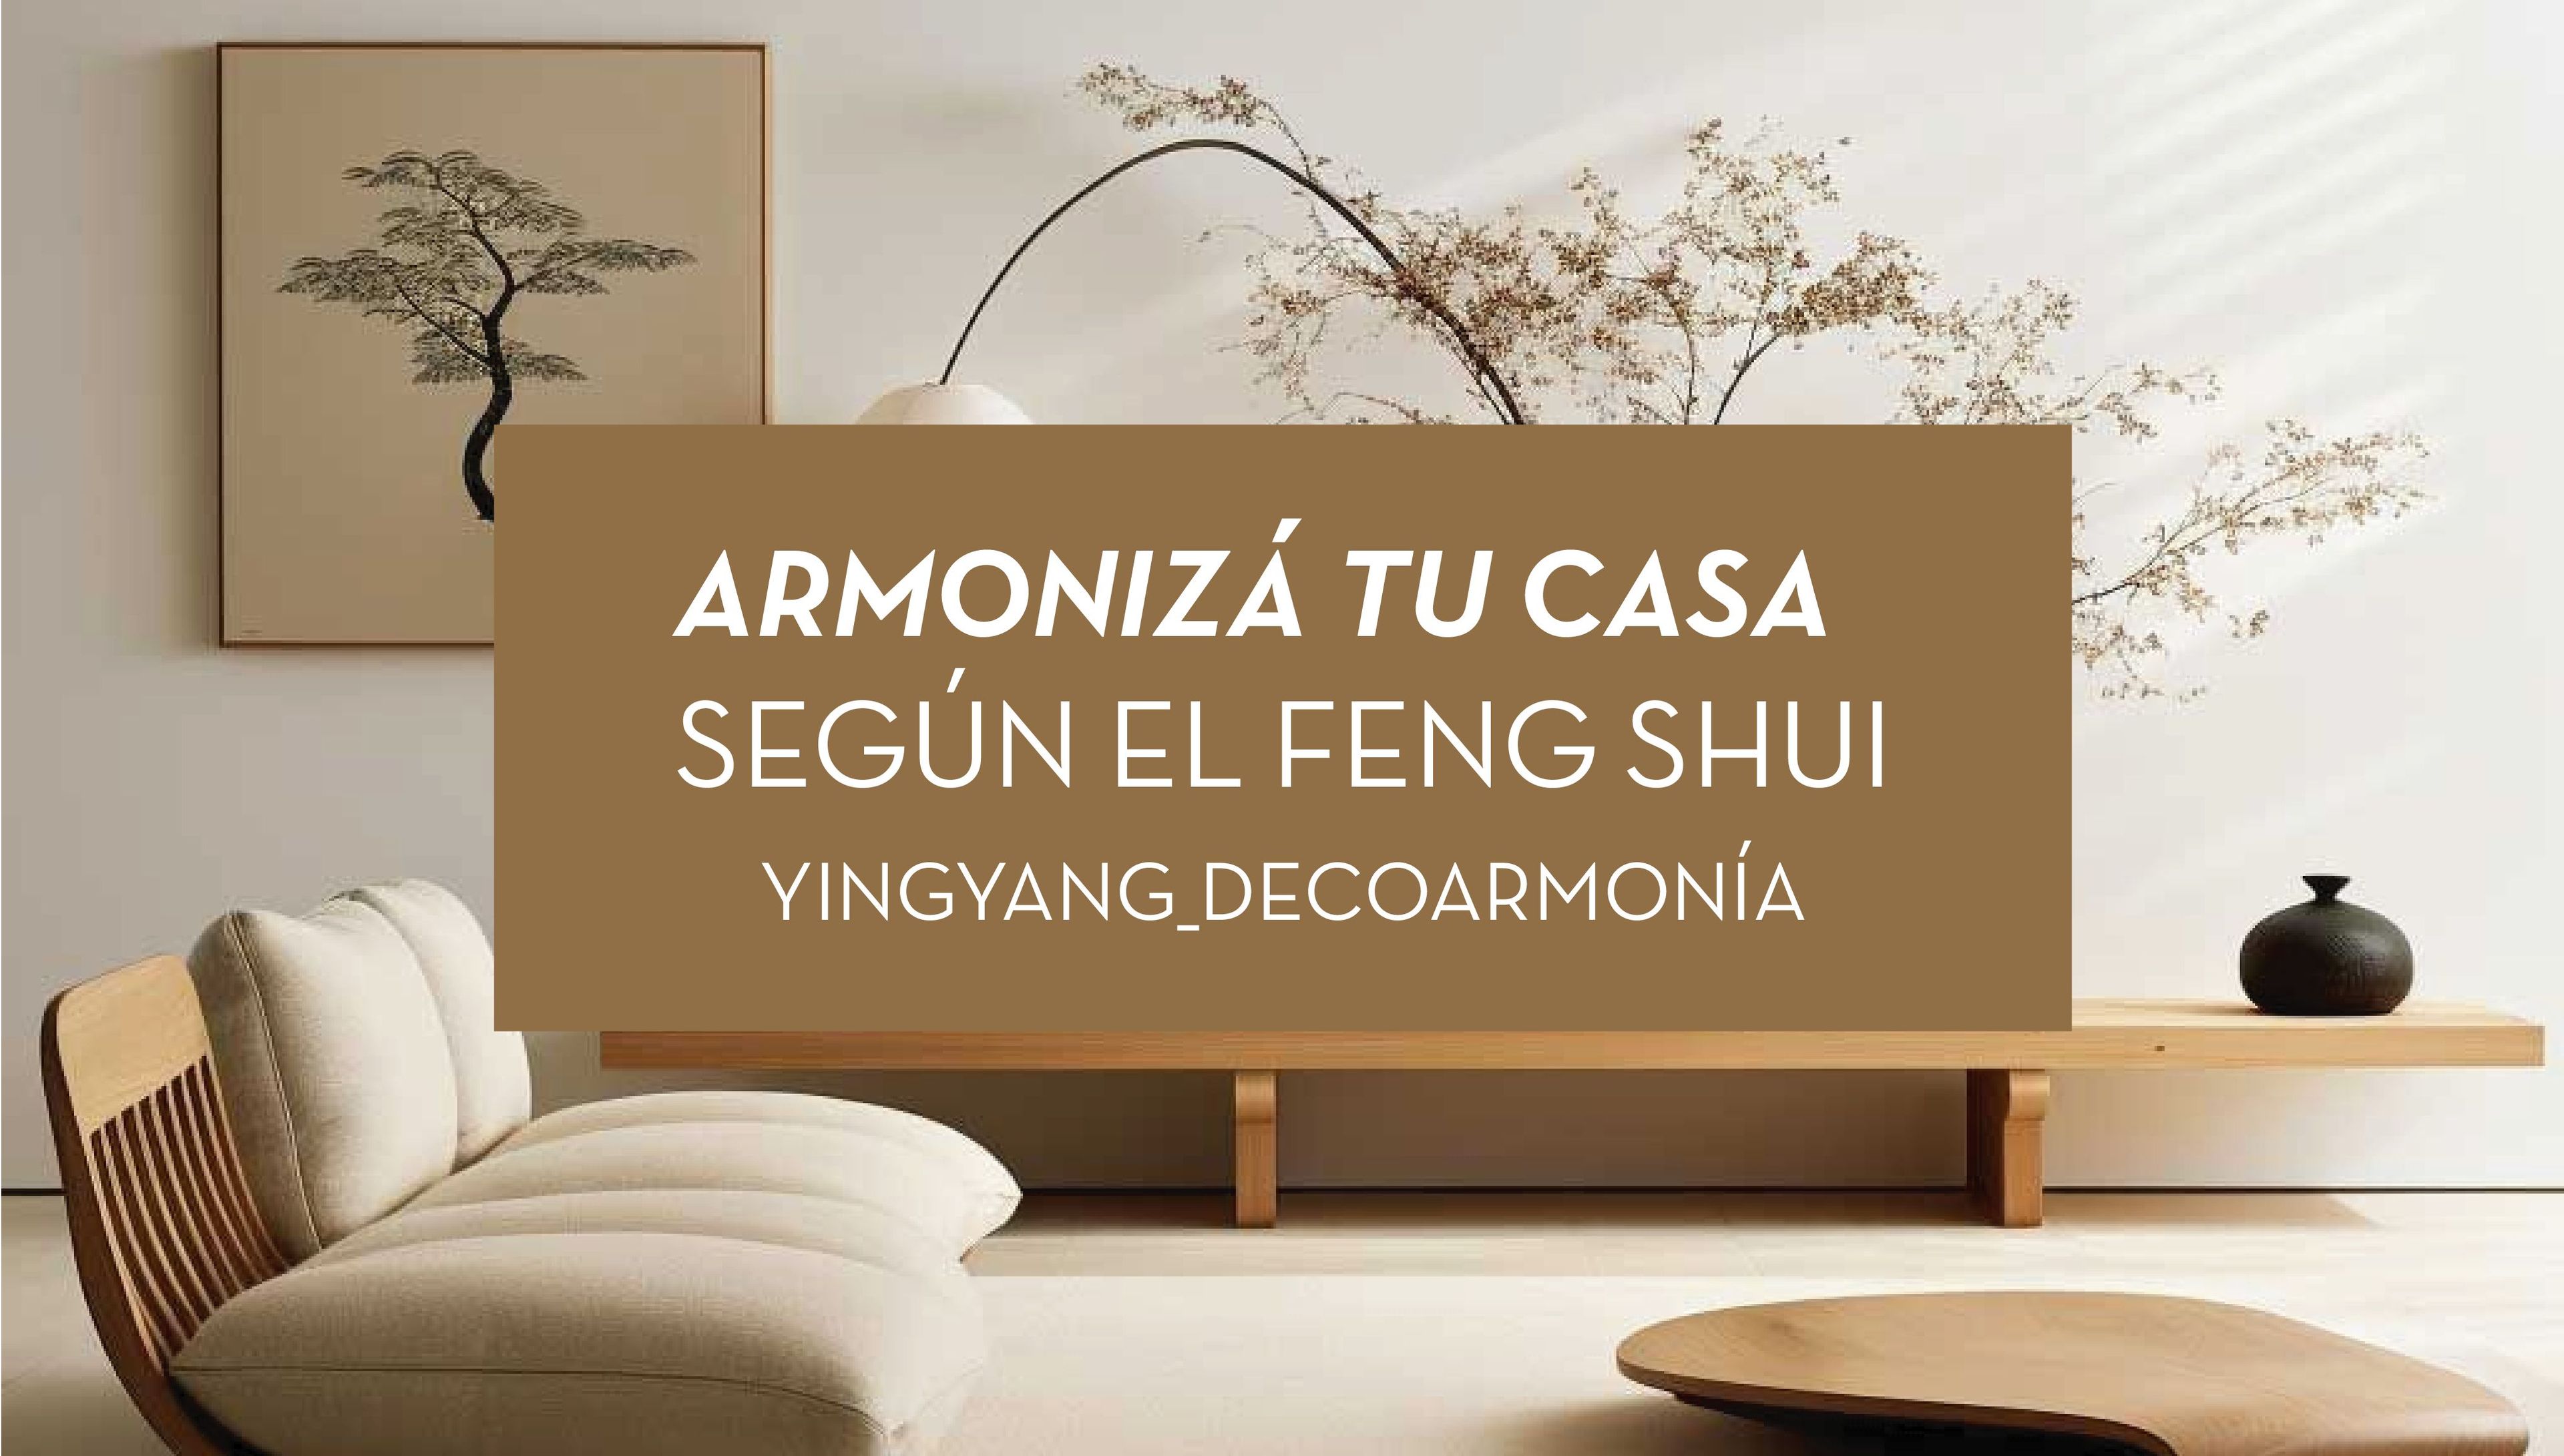 Armonizá tu casa según el Feng Shui